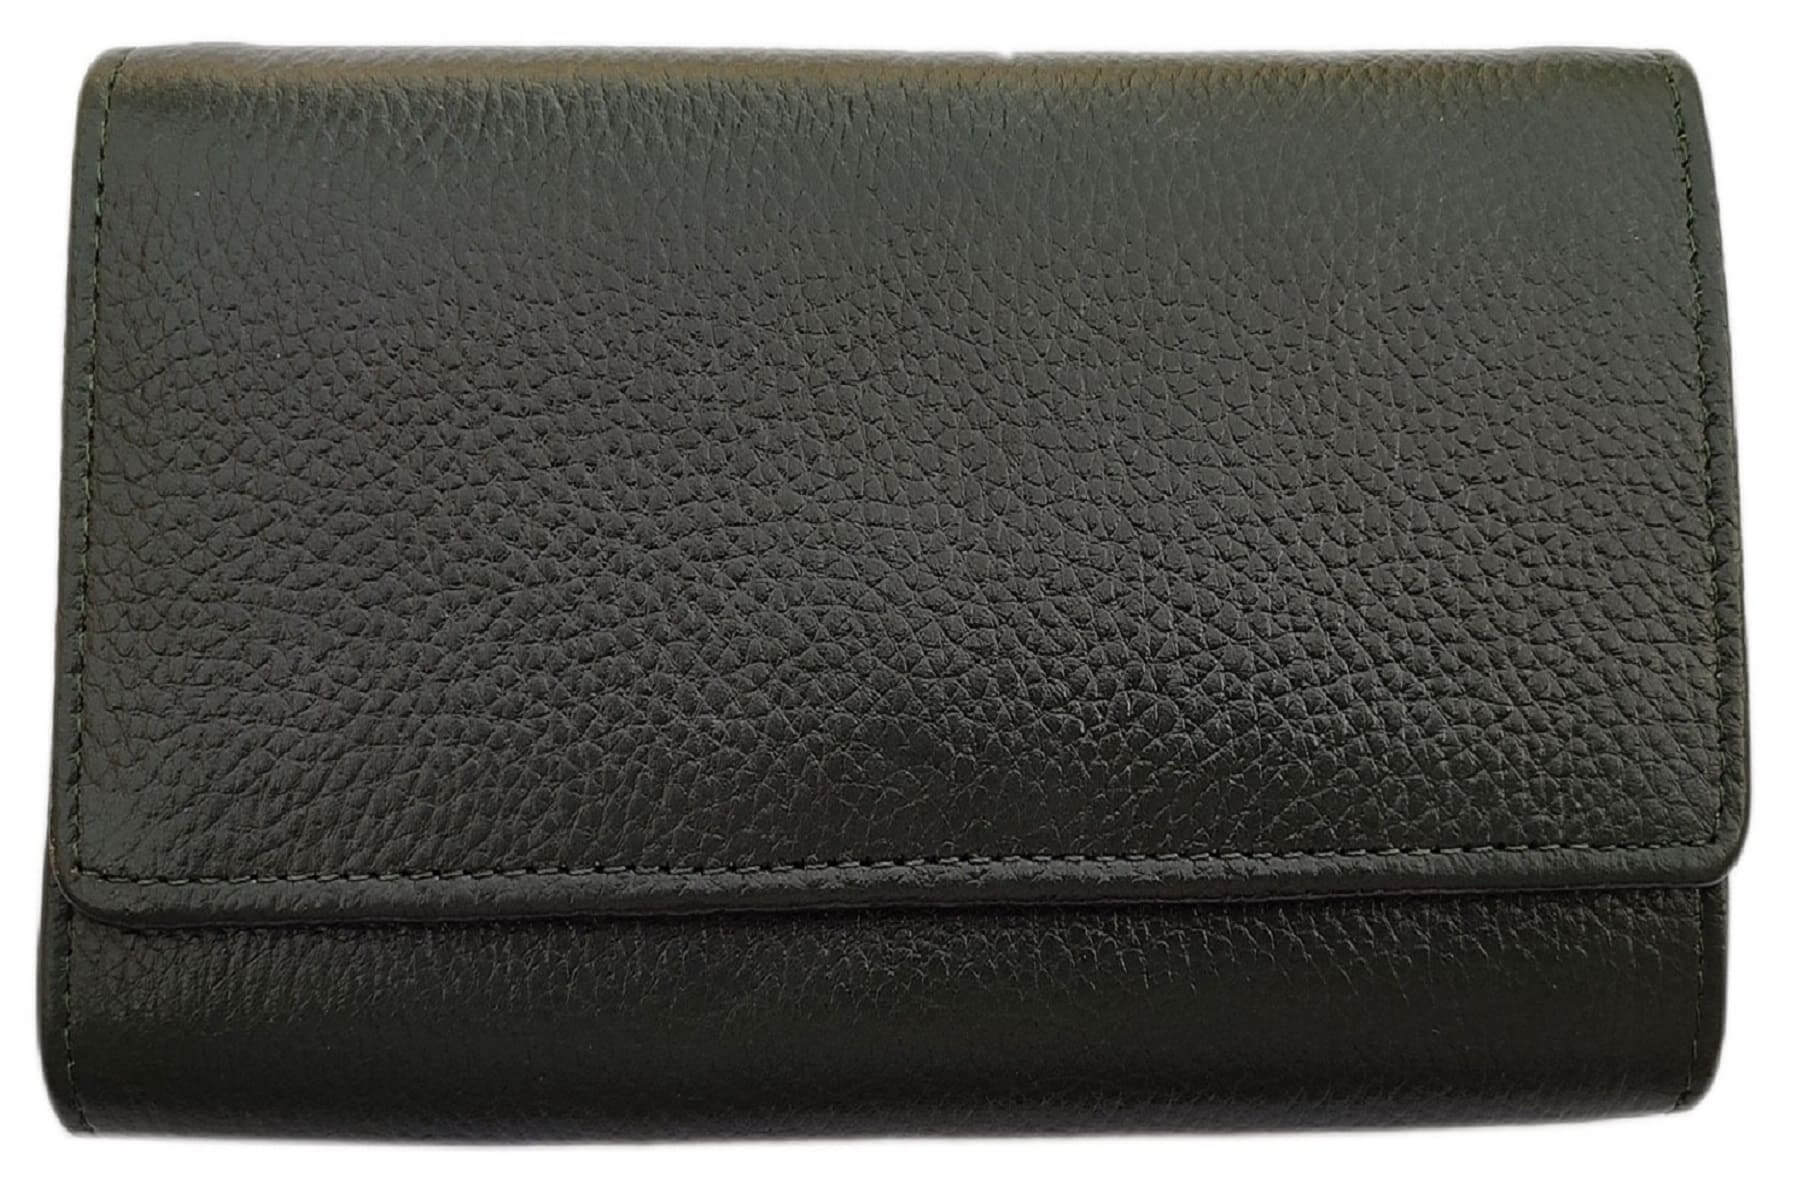 Elliott Lucca Genuine Leather Hobo Handbag Purse White Color | eBay